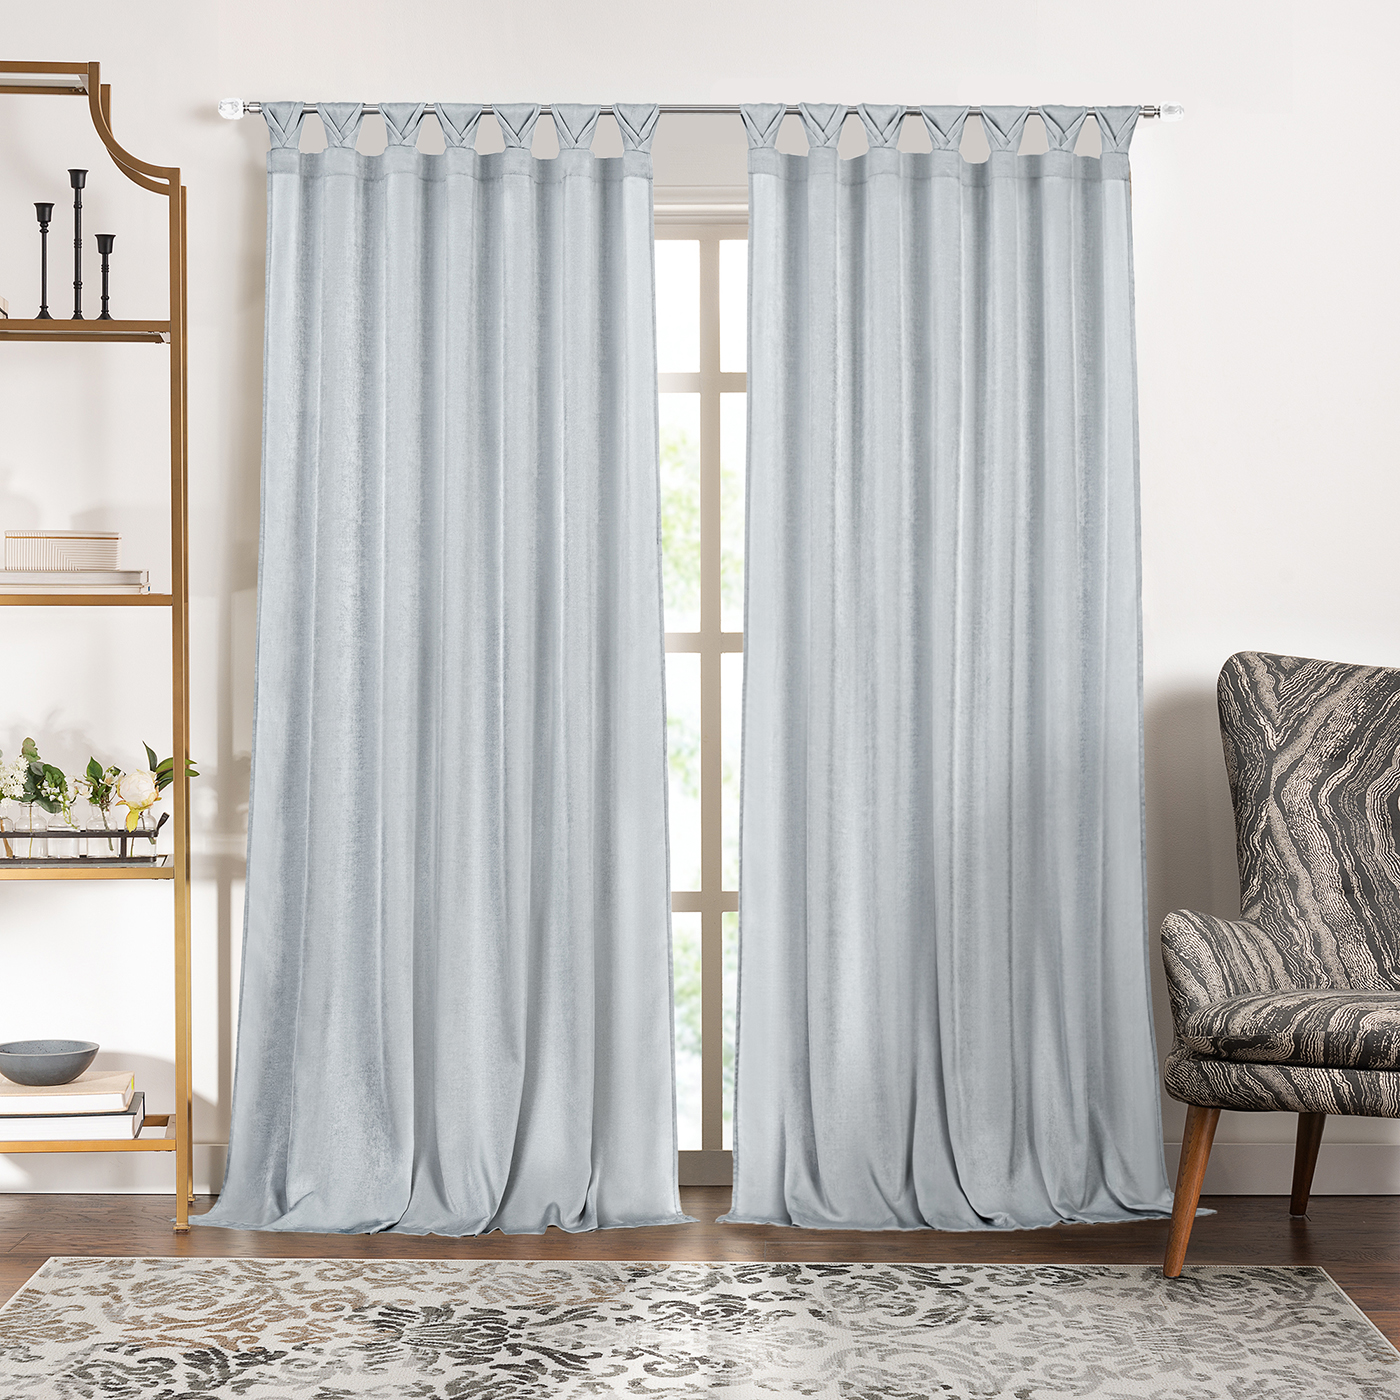 Achim Home Furnishing: Peri Window Curtain Panels with Tulip Tab Top, Silver